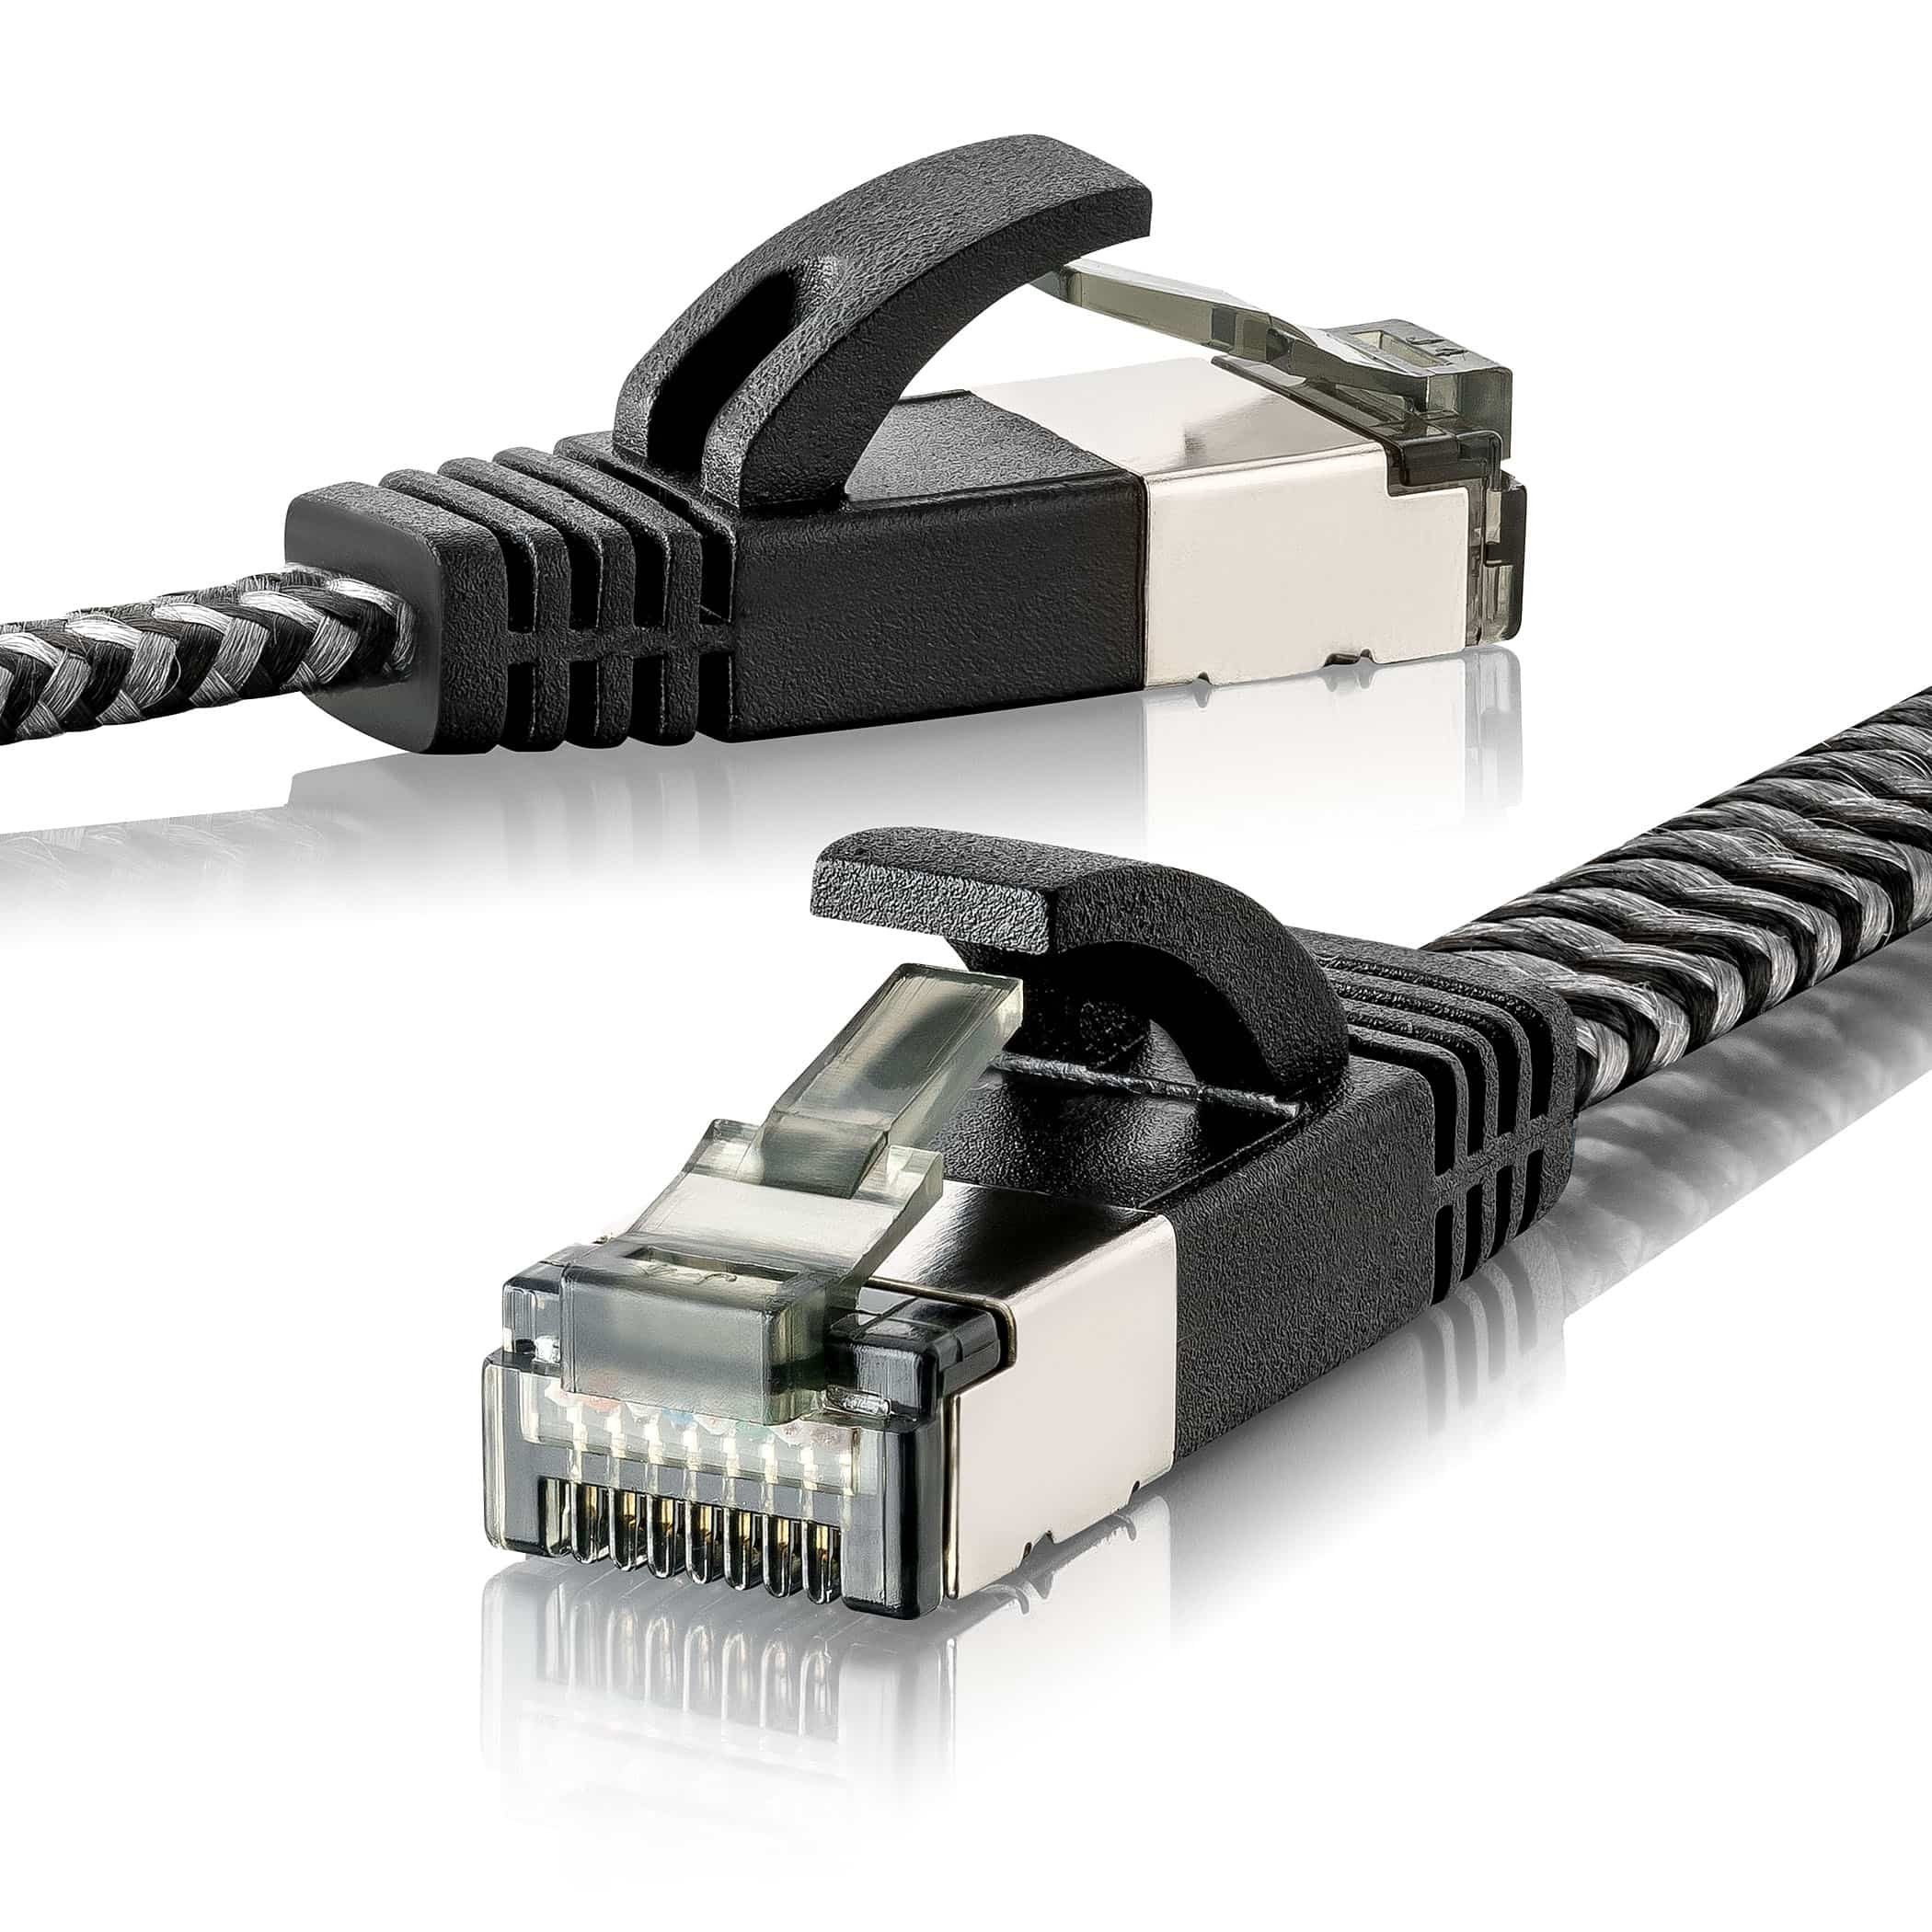 SEBSON »LAN Kabel 5m CAT 7 flach, Netzwerkkabel 10 Gbit/s, RJ45 Stecker für  Router, PC, TV, NAS, Spielekonsolen - Ethernet Kabel U-FTP abgeschirmt«  Netzkabel online kaufen | OTTO